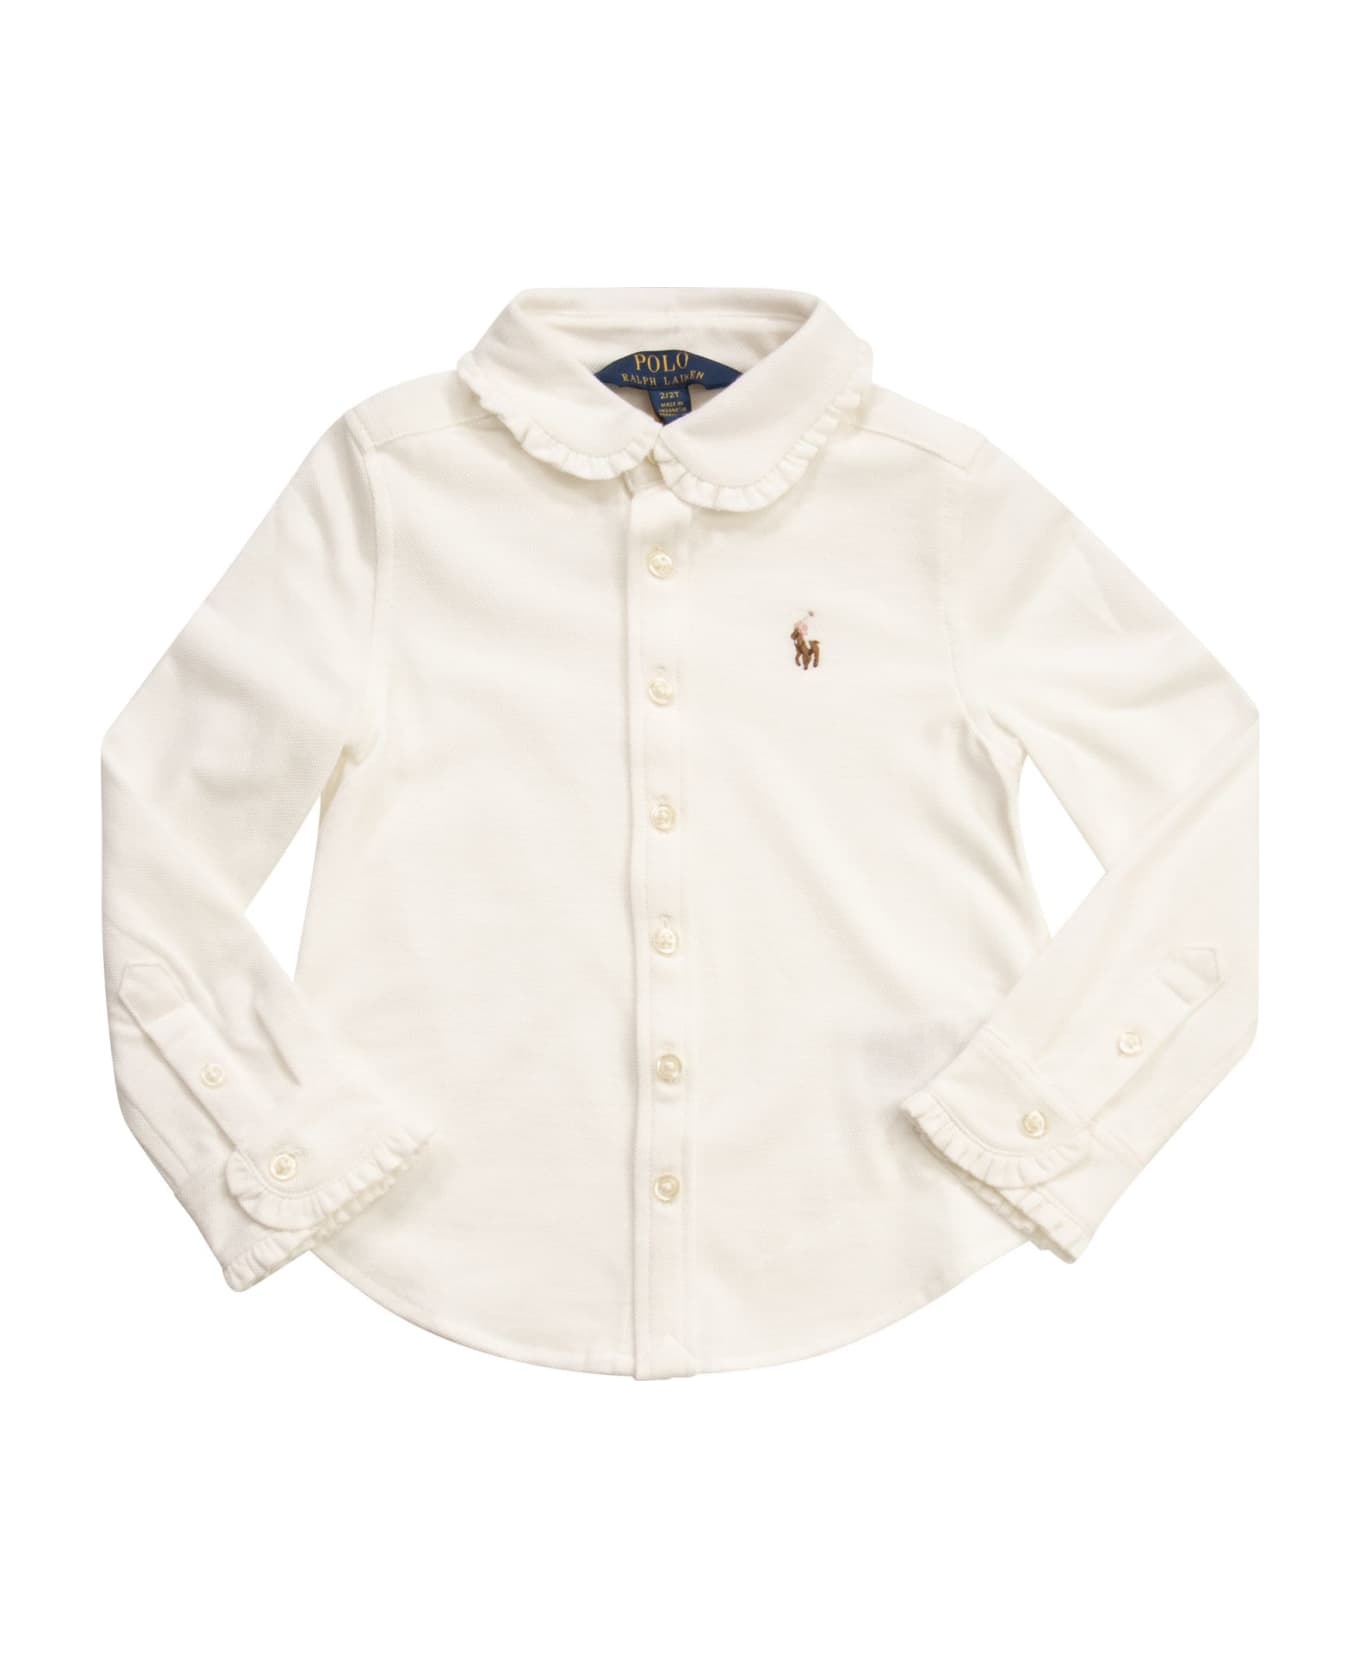 Polo Ralph Lauren Knitted Oxford Shirt - White